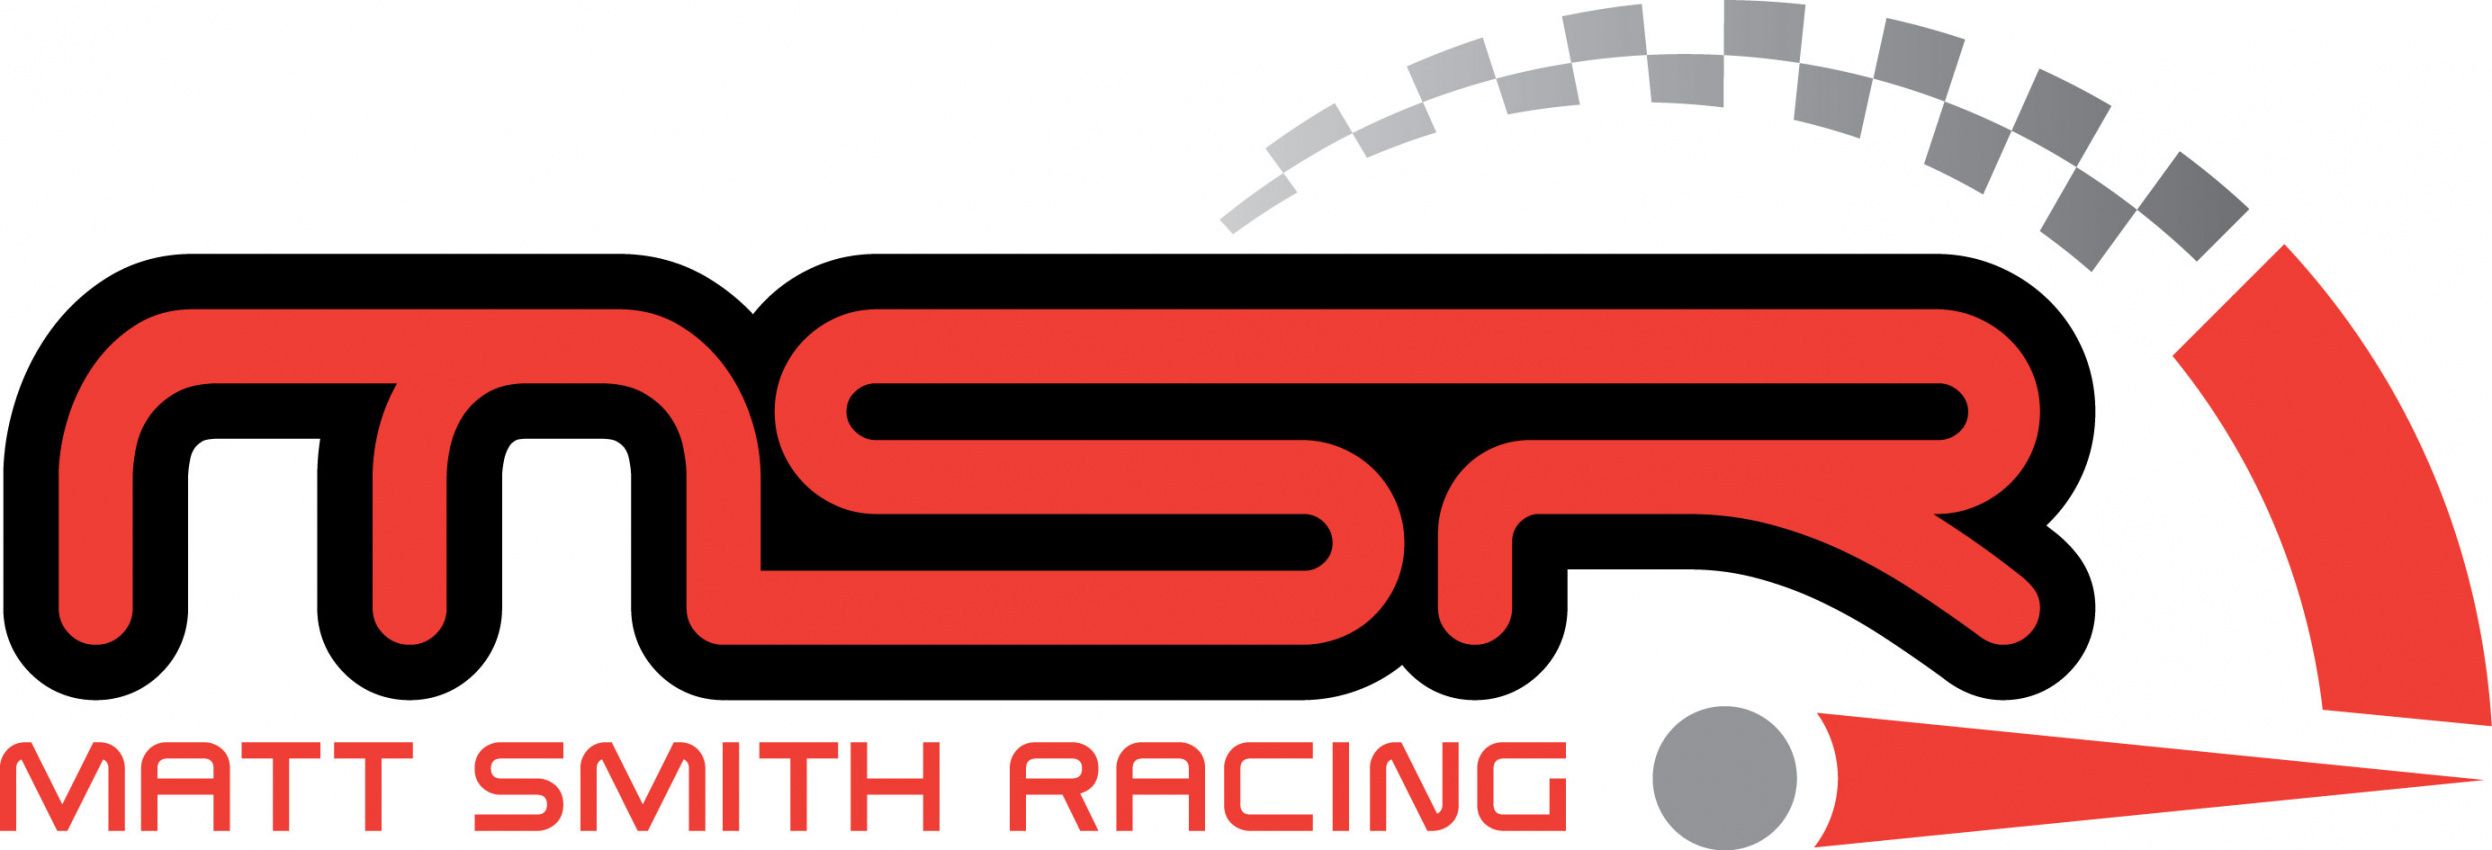 free angie smith lands new nhra pro stock motorcycle sponsor drag racing sponsorship proposal template pdf